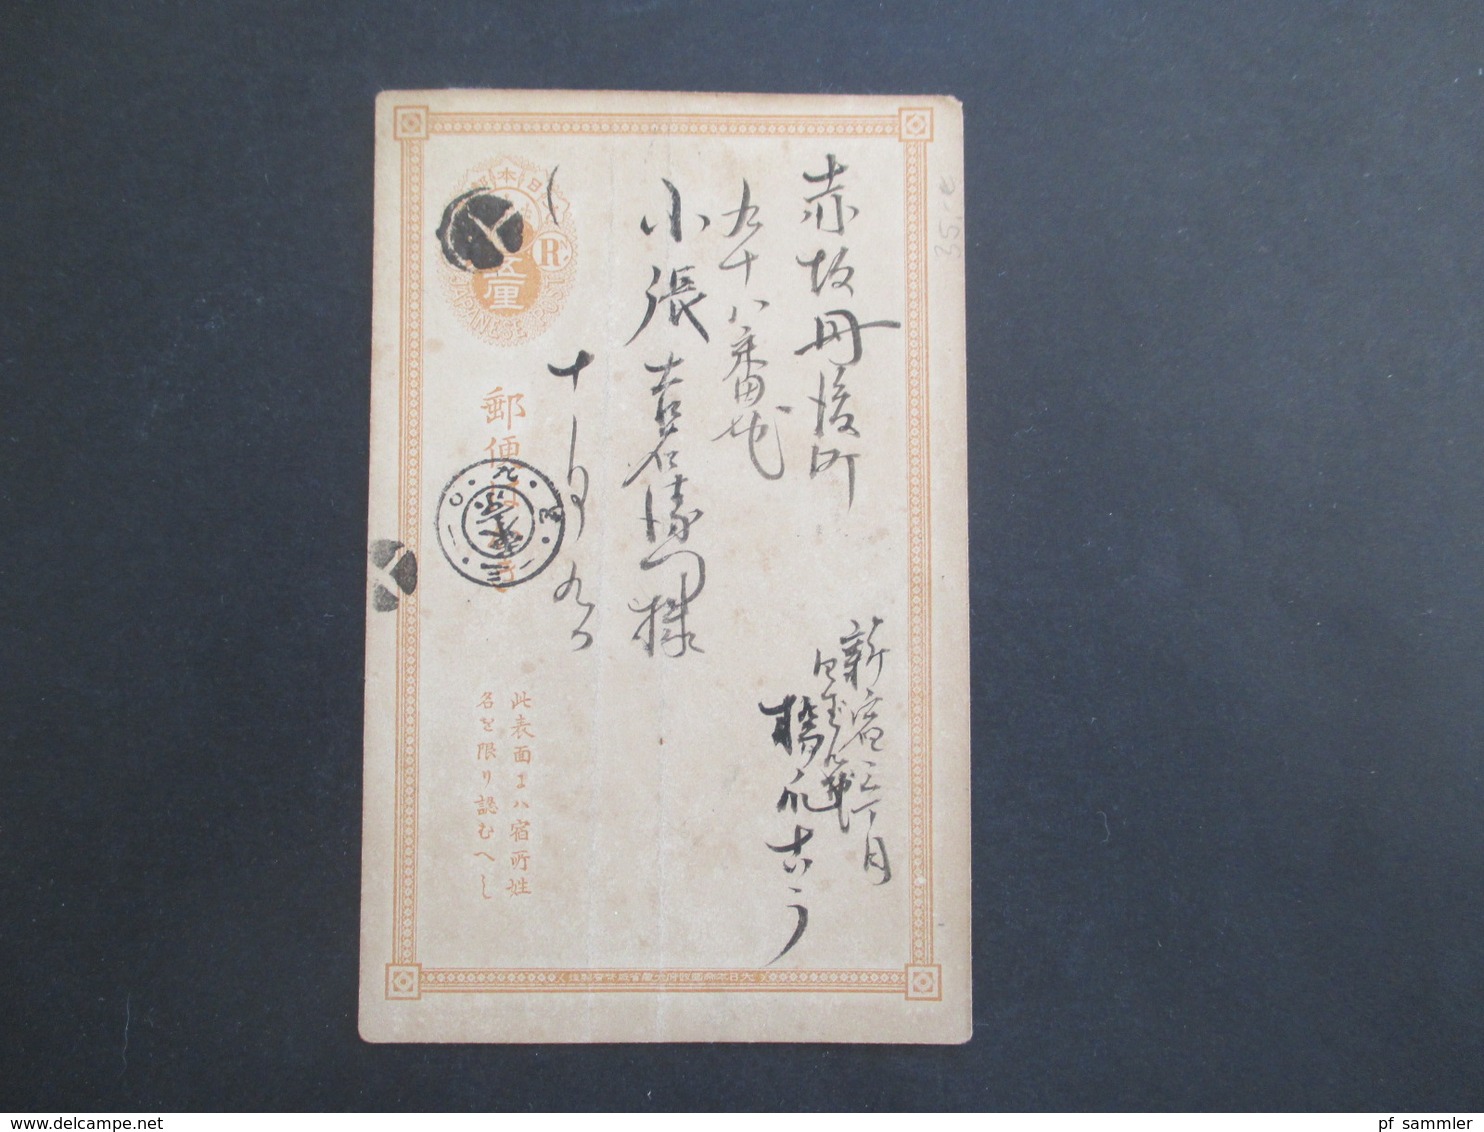 Japan Alte Ganzsache 3 Stempel Japanese Post - Cartas & Documentos